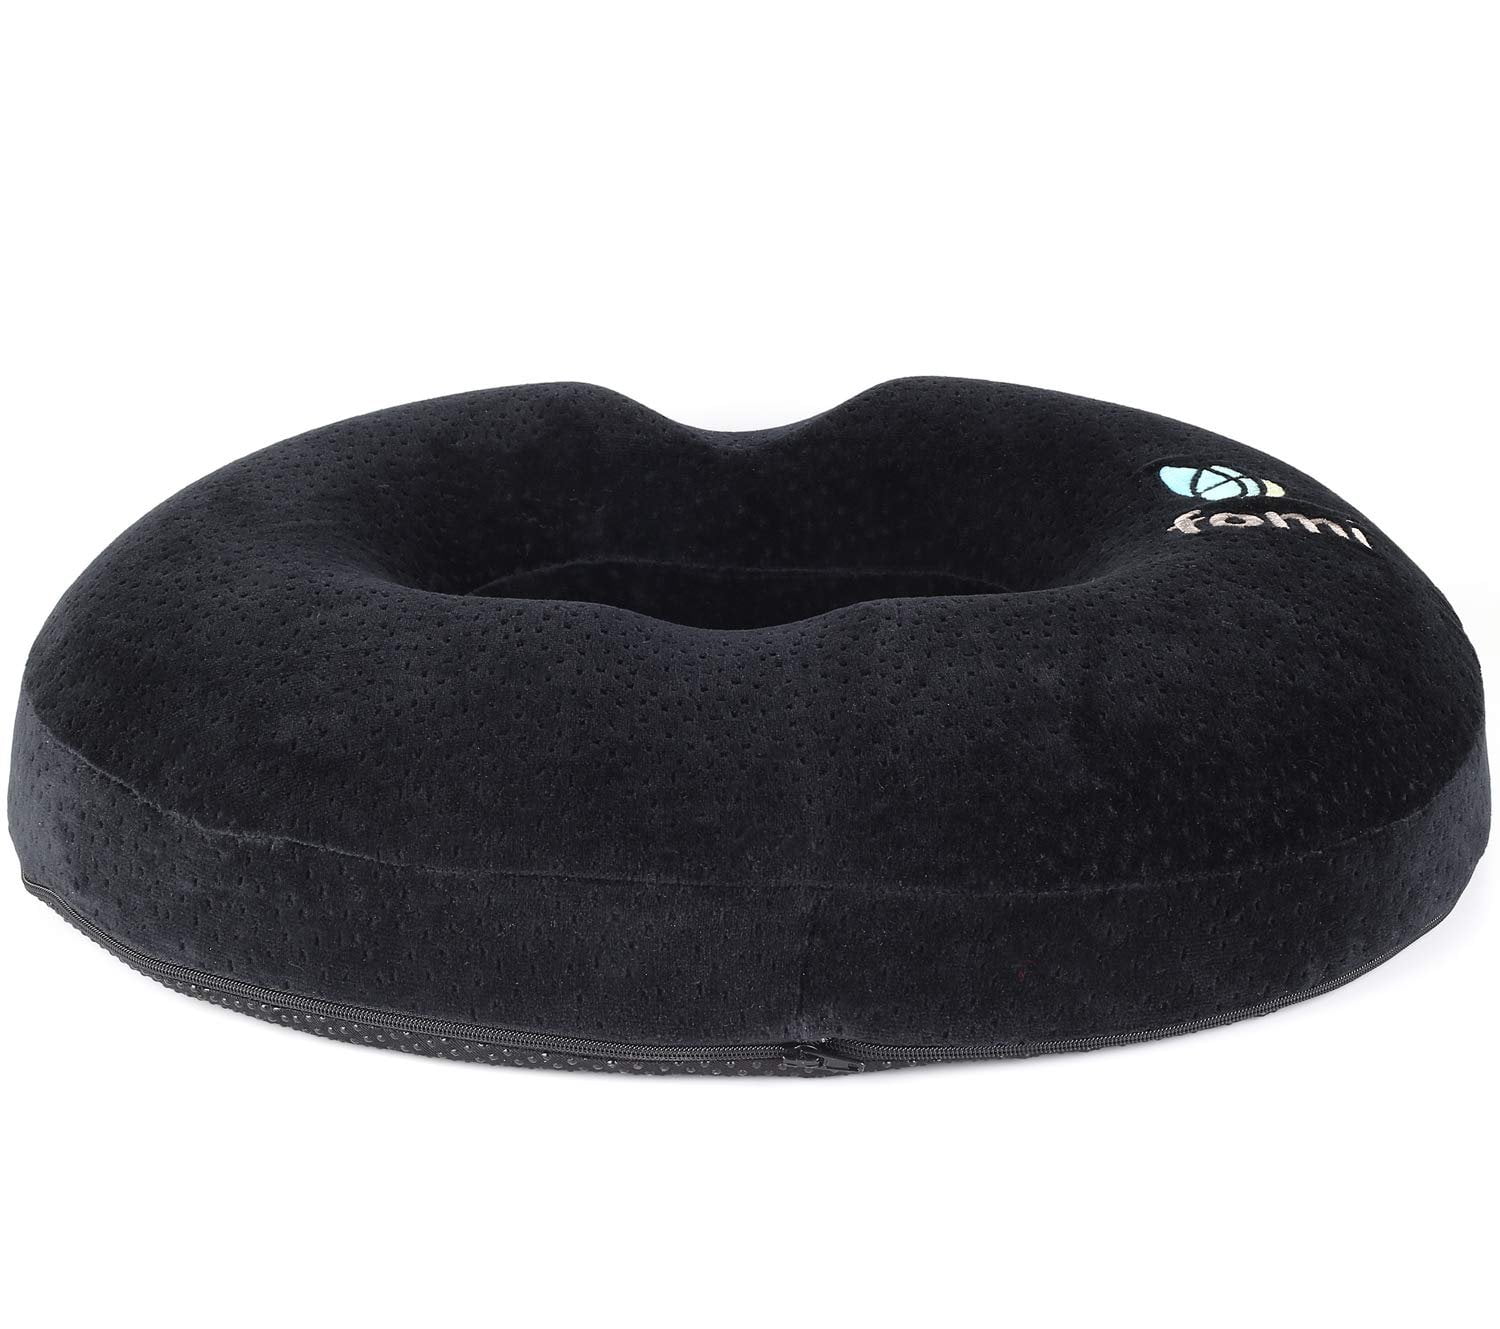 Buy Wholesale China Wholesale Soft Ergonomic Hip Shaped Butt Pillow Cushion  & Ergonomic Butt Pillow at USD 41.76